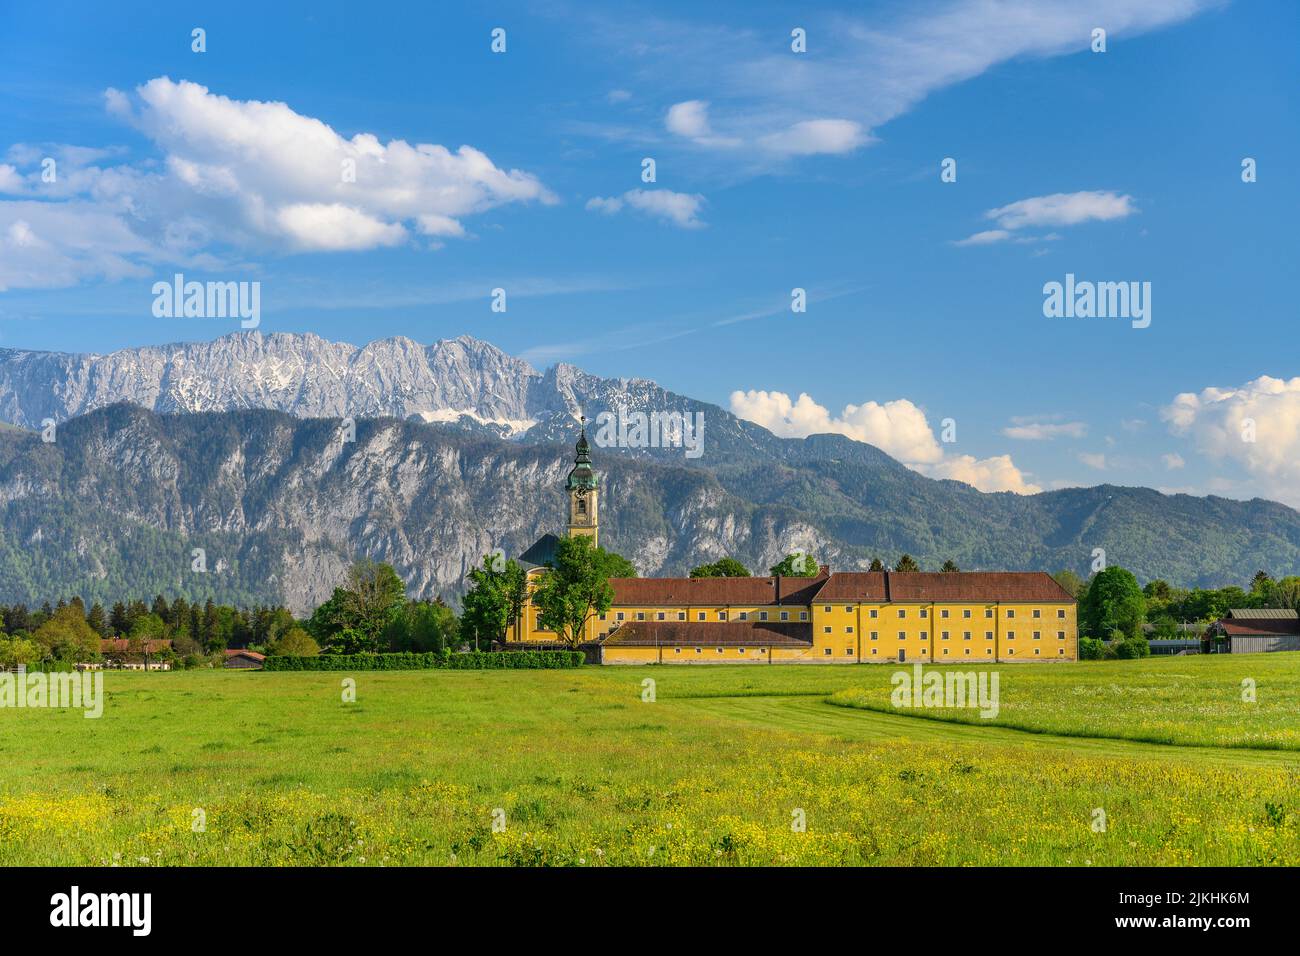 Germany, Bavaria, county Rosenheim, Oberaudorf, monastery Reisach against Kaiser mountains Stock Photo